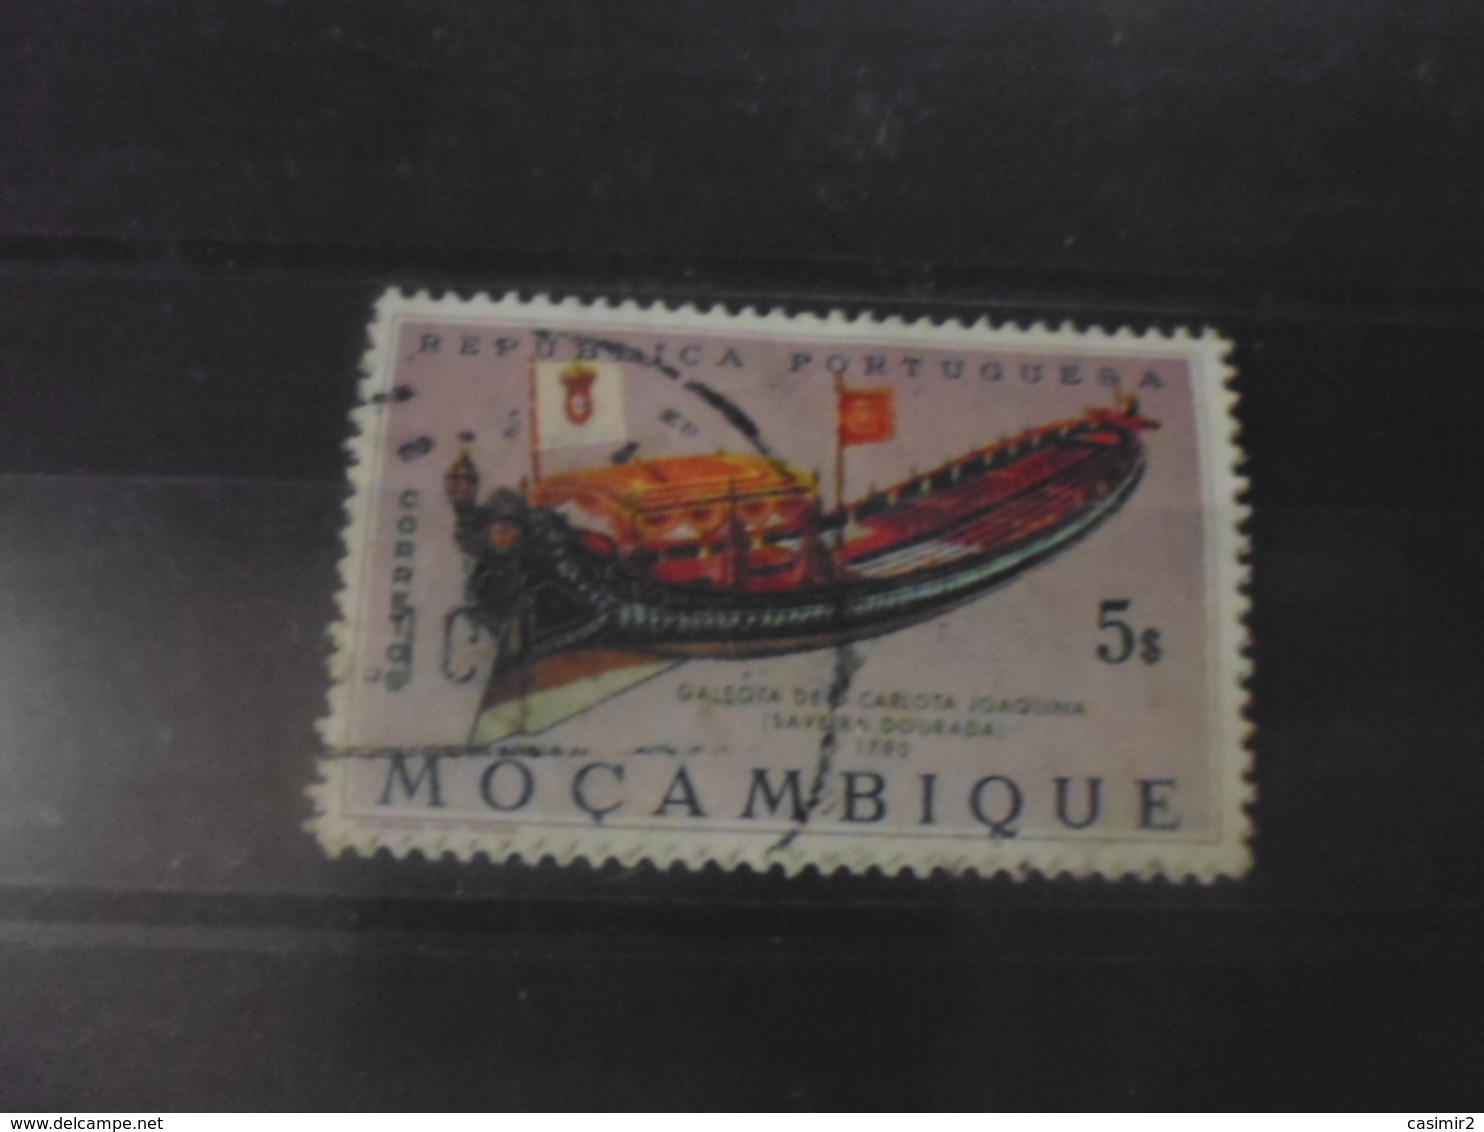 MOZAMBIQUE YVERT N° 517 - Mozambico